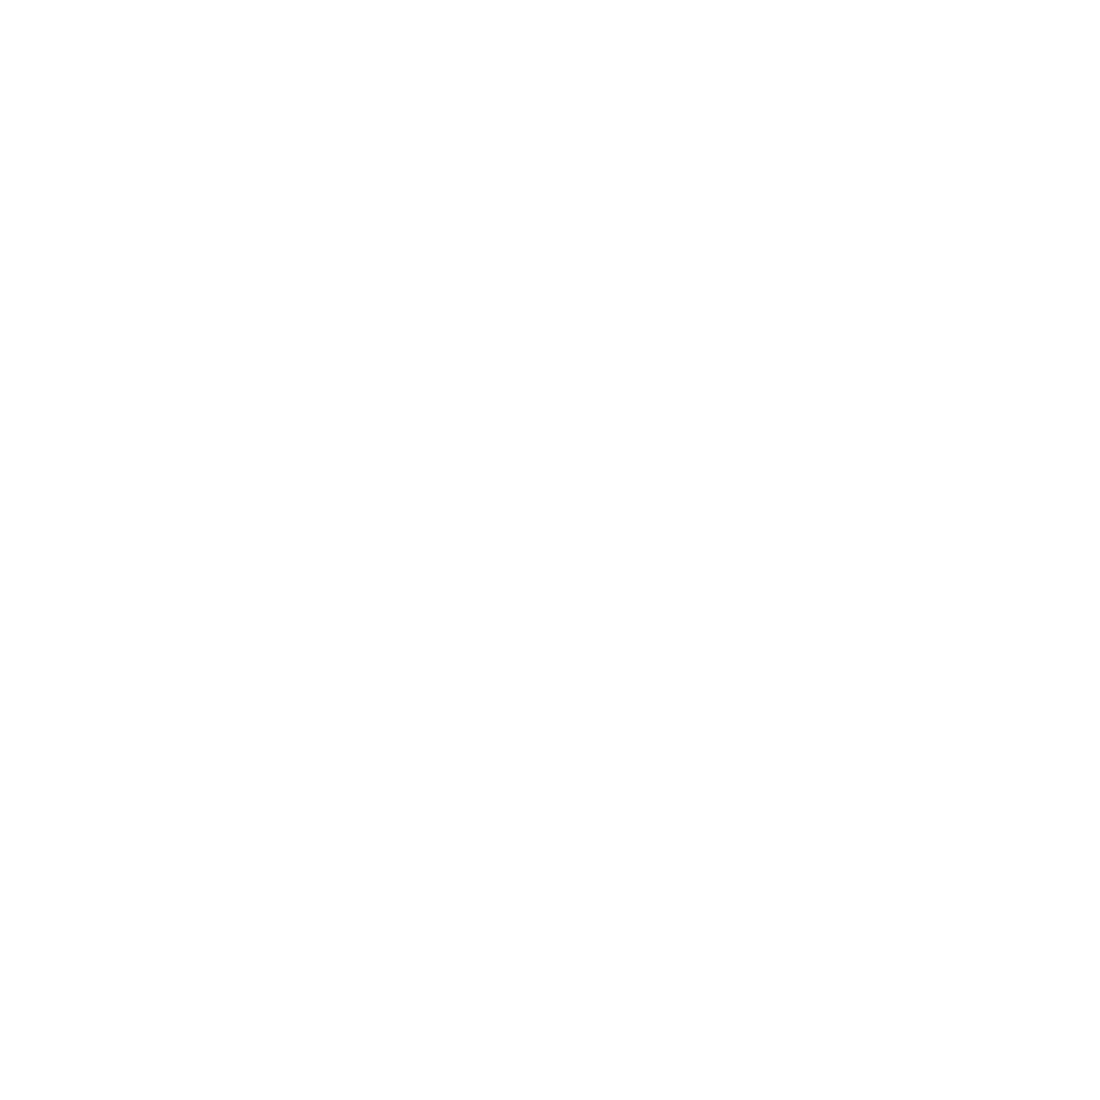 Seymour's